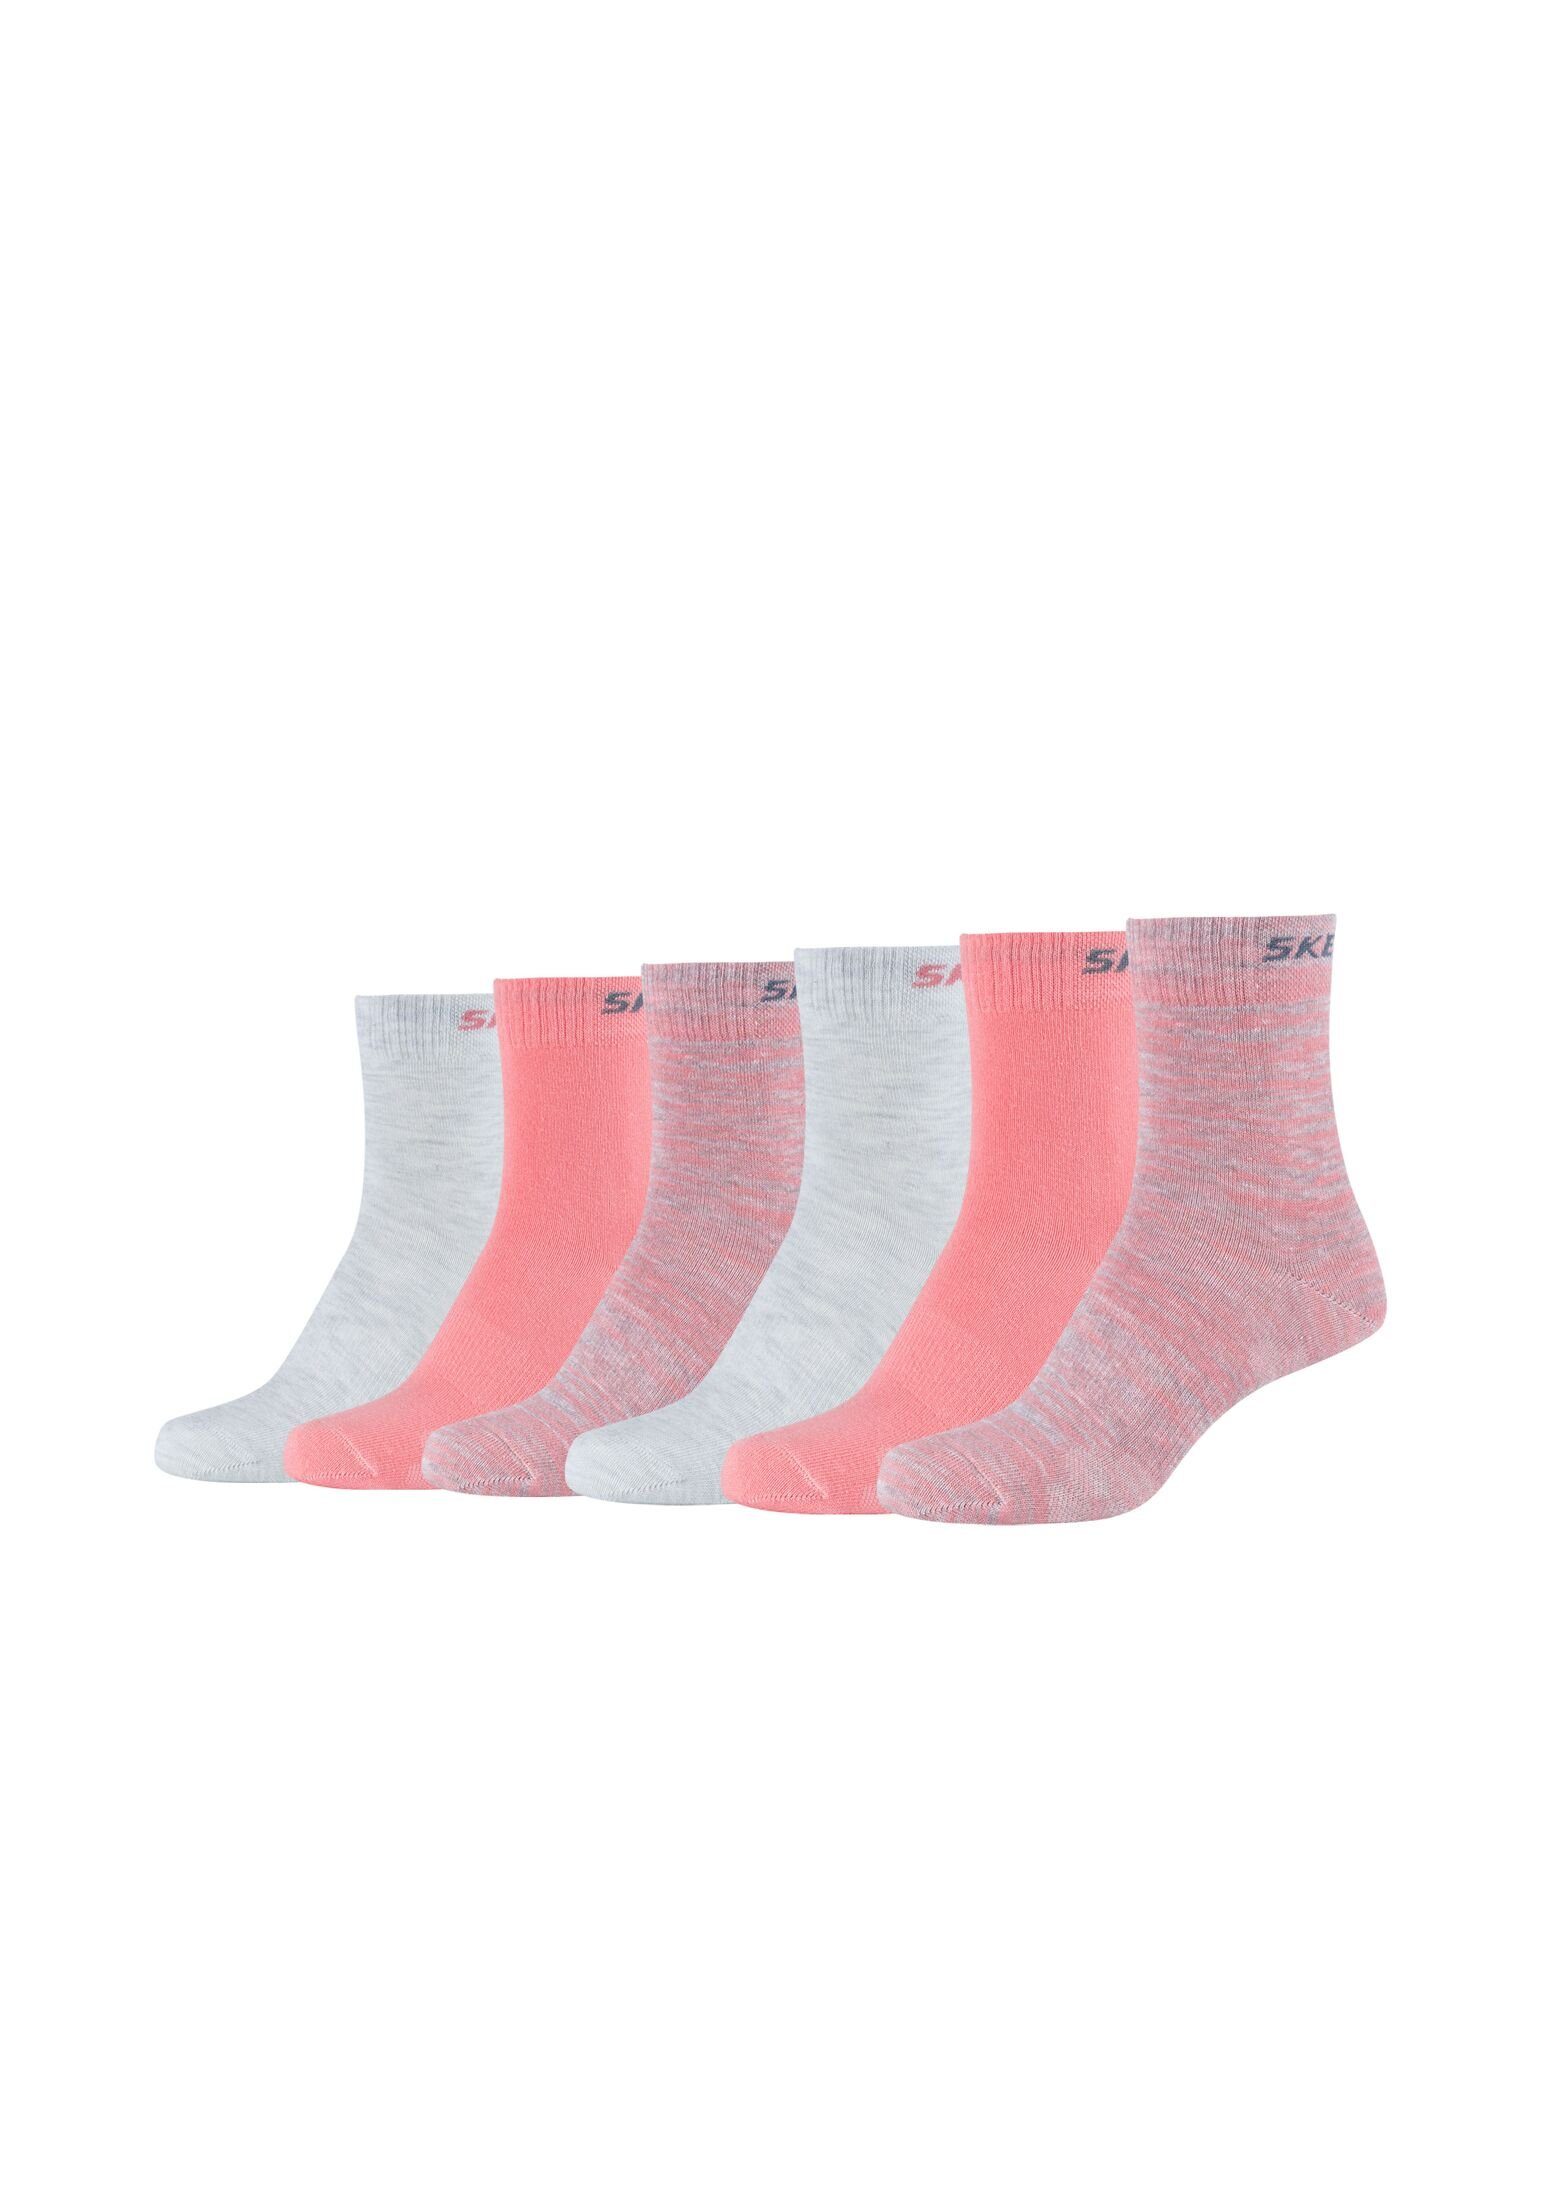 Skechers Socken Socken 6er Pack mouliné flamingo